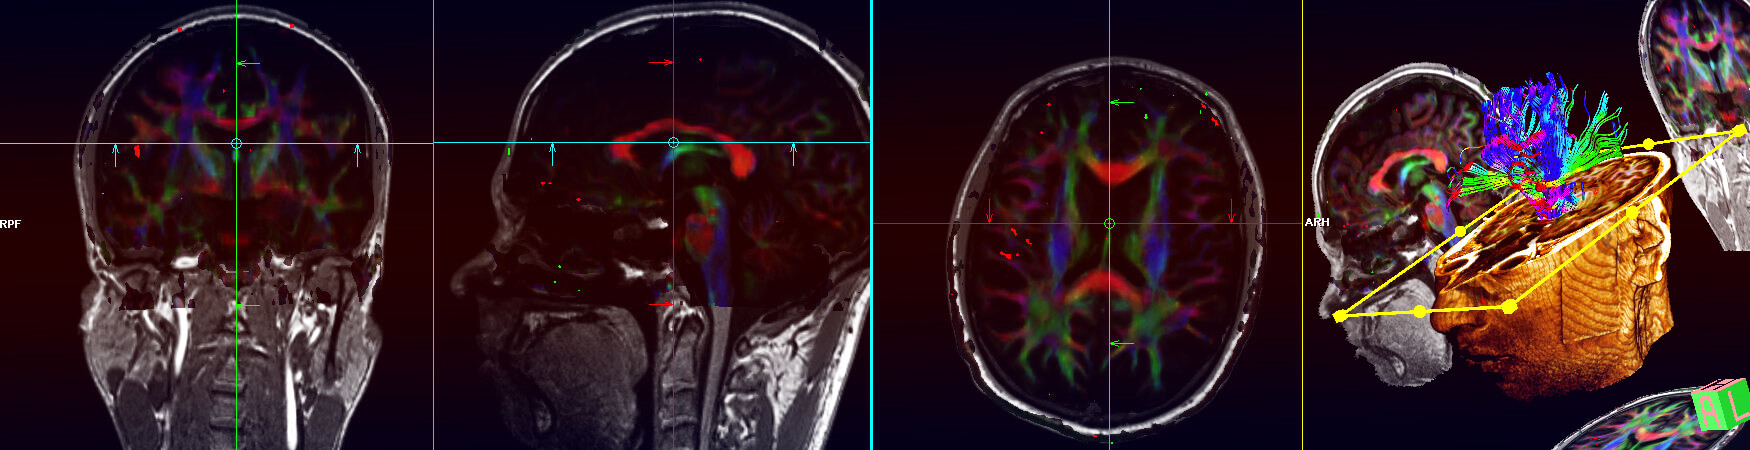 3 panels of MRI brain scans